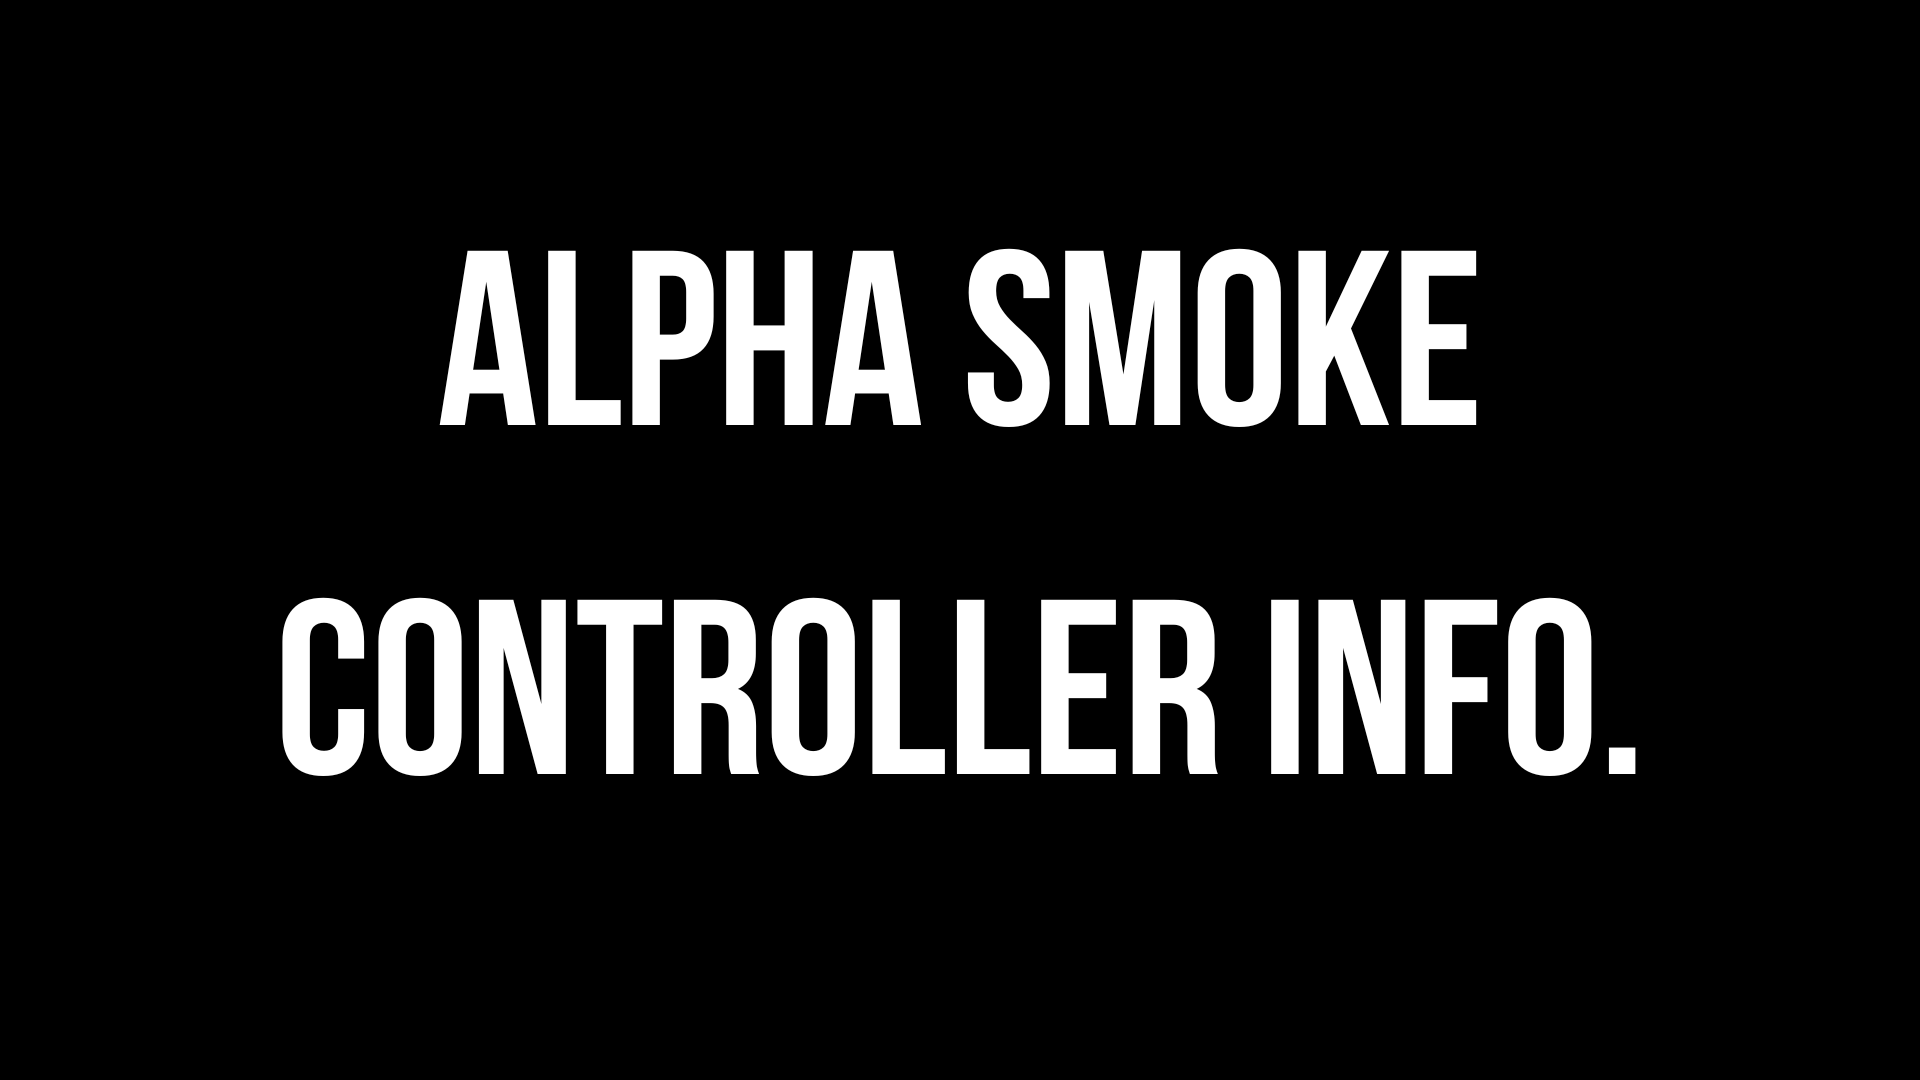 Alpha Smoke controller information